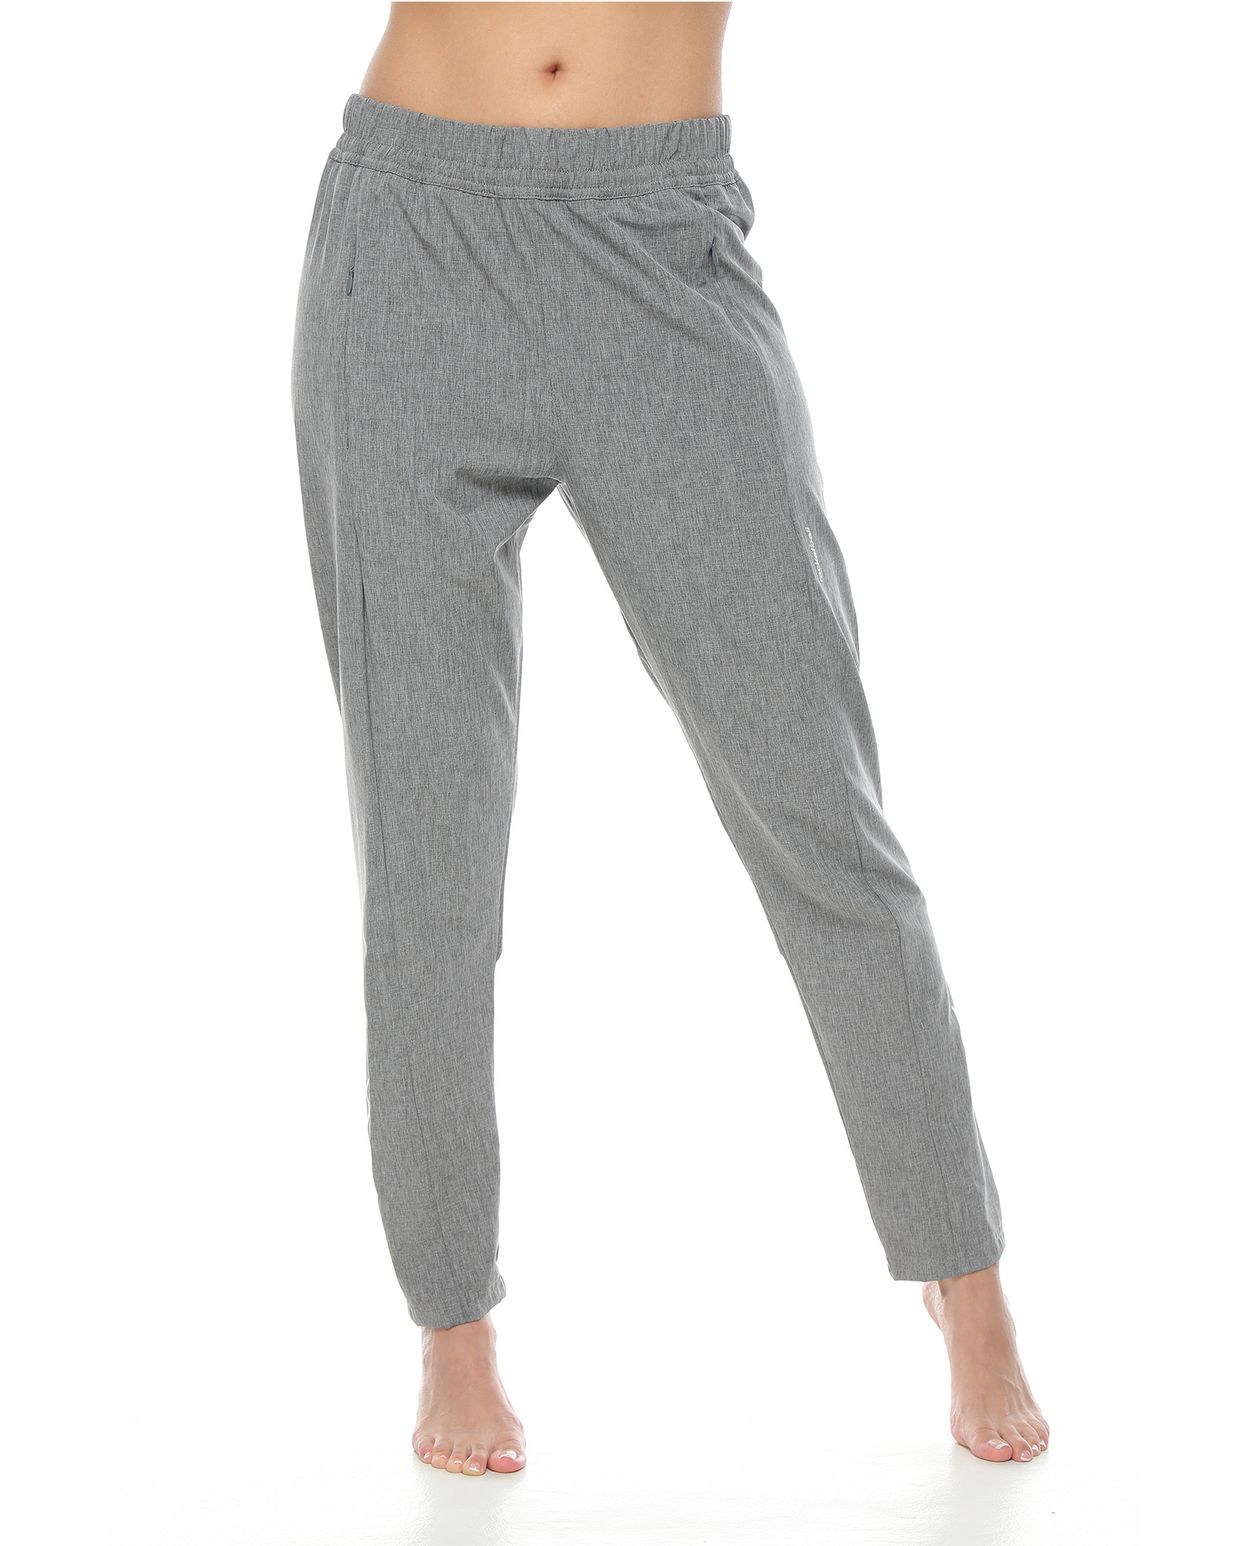 Pantalon deportivo para mujer, color gris - racketball movil